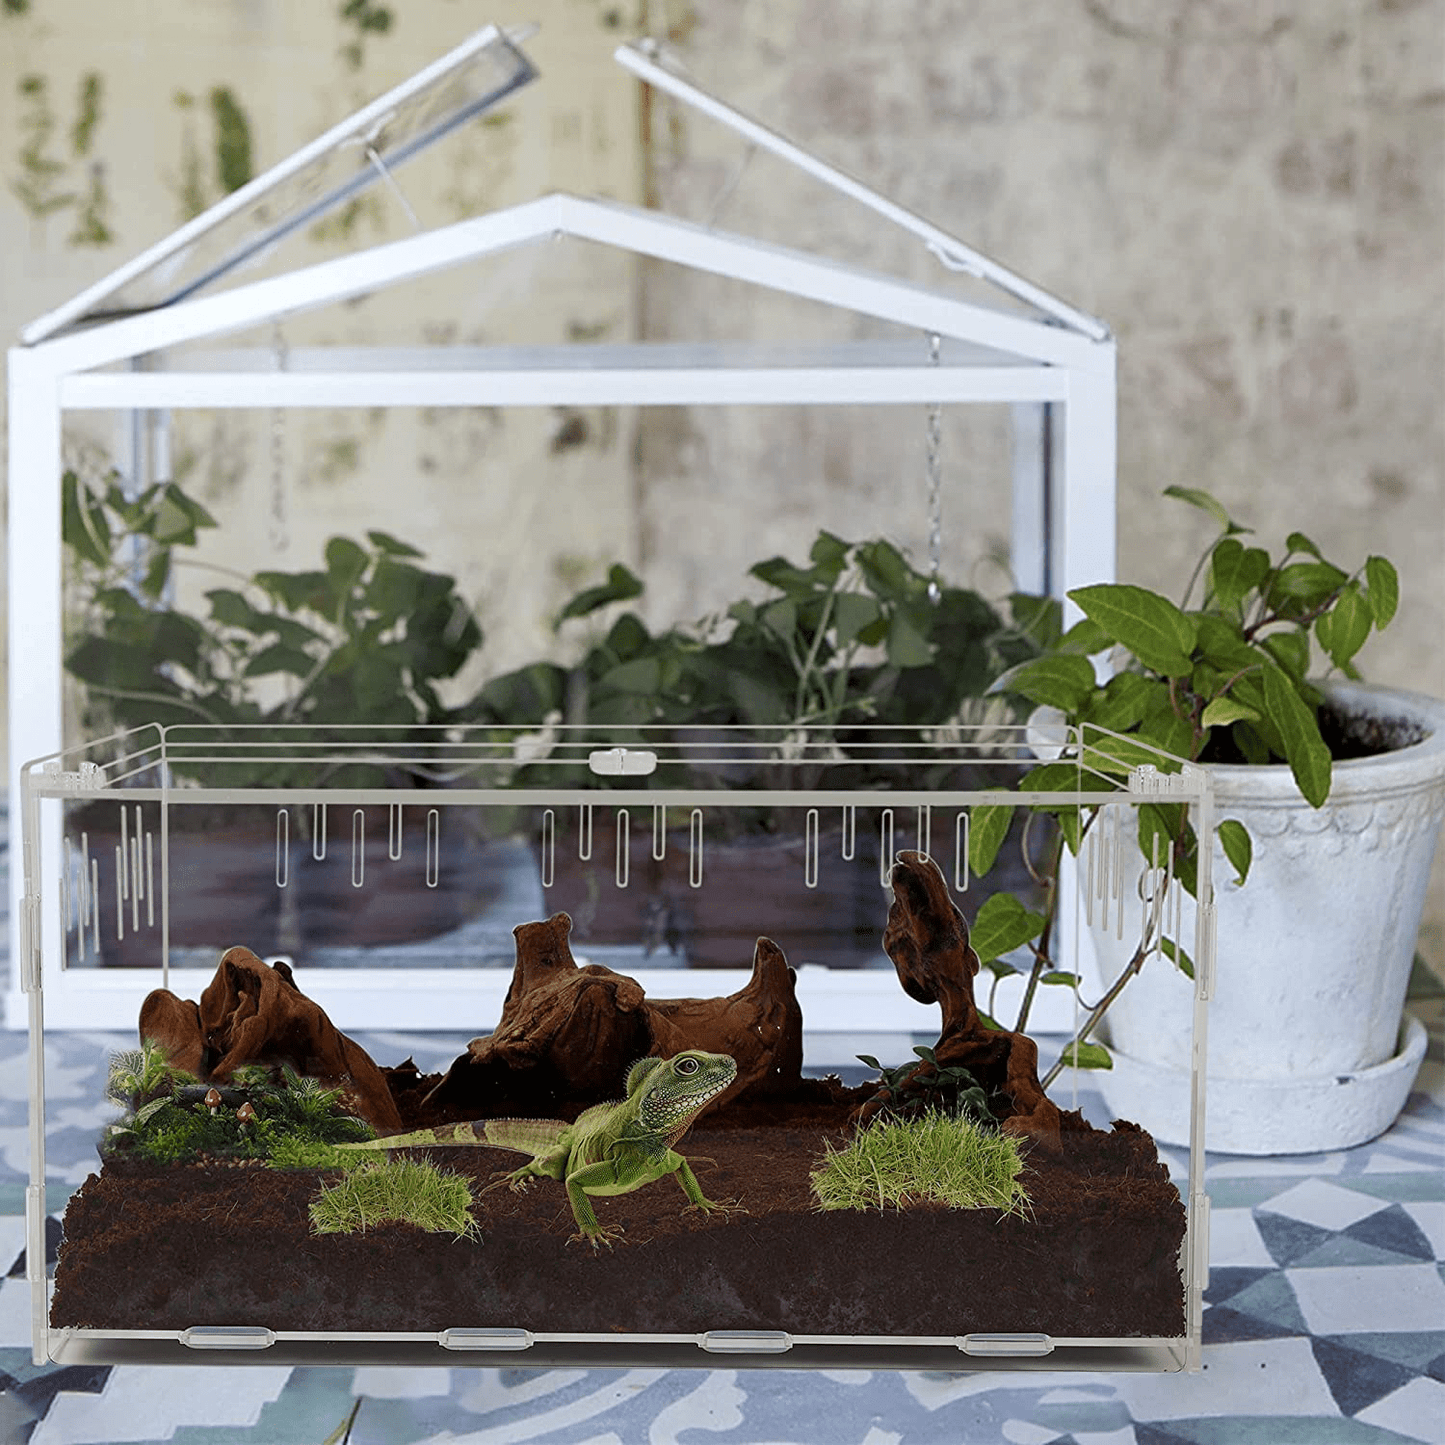 Winemana Reptile Terrarium Breeding Tank, Acrylic Large Feeding Tarantula Habitat Box for Small Animals Insect Home Office